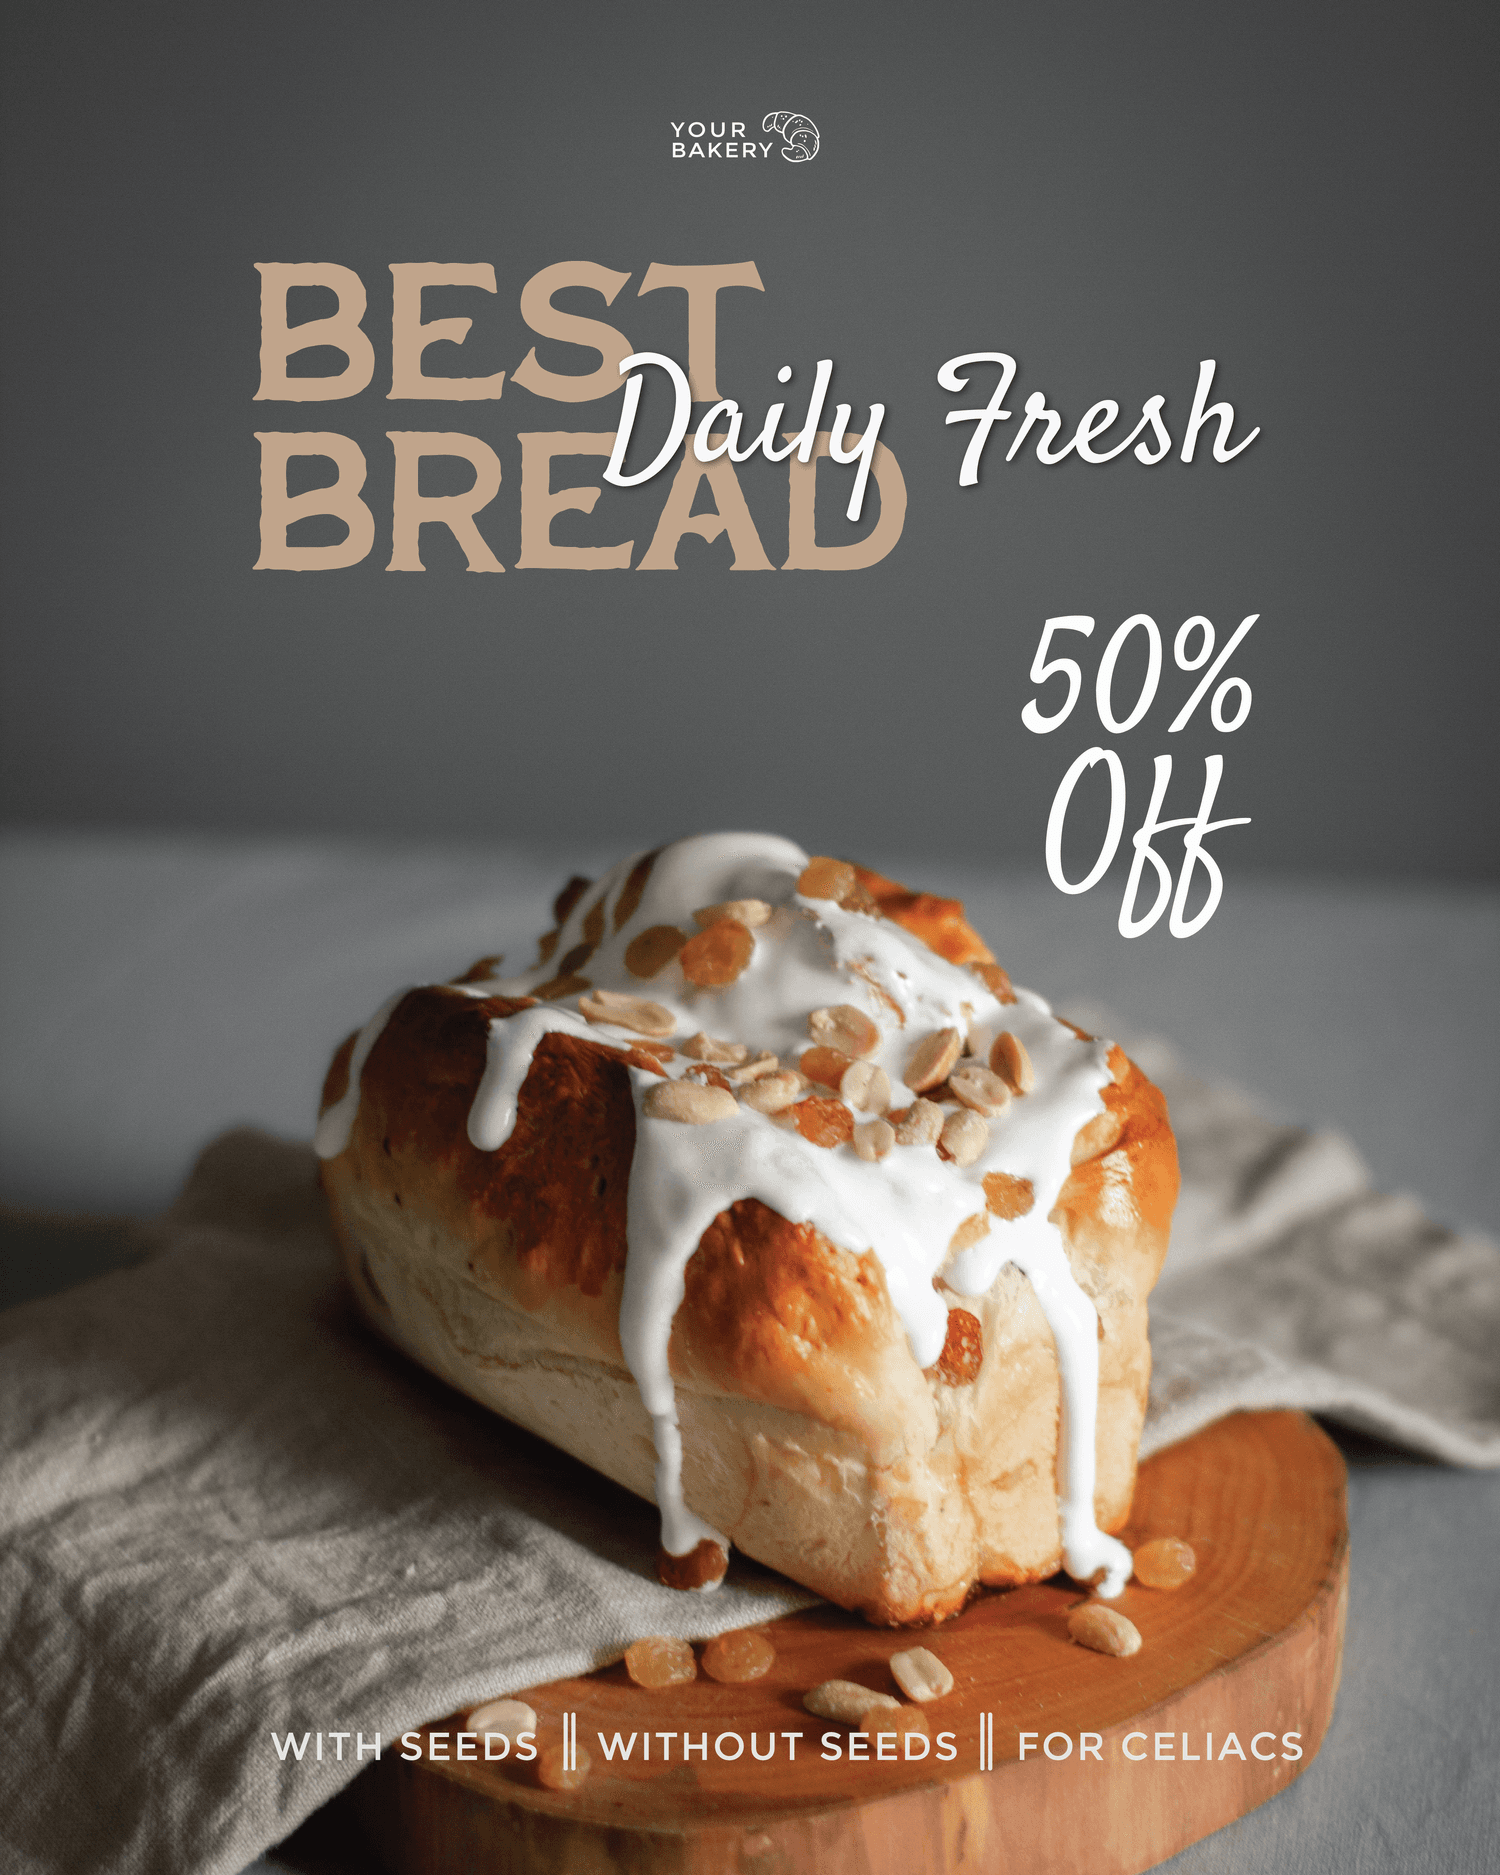 fresh bread bakery poster template